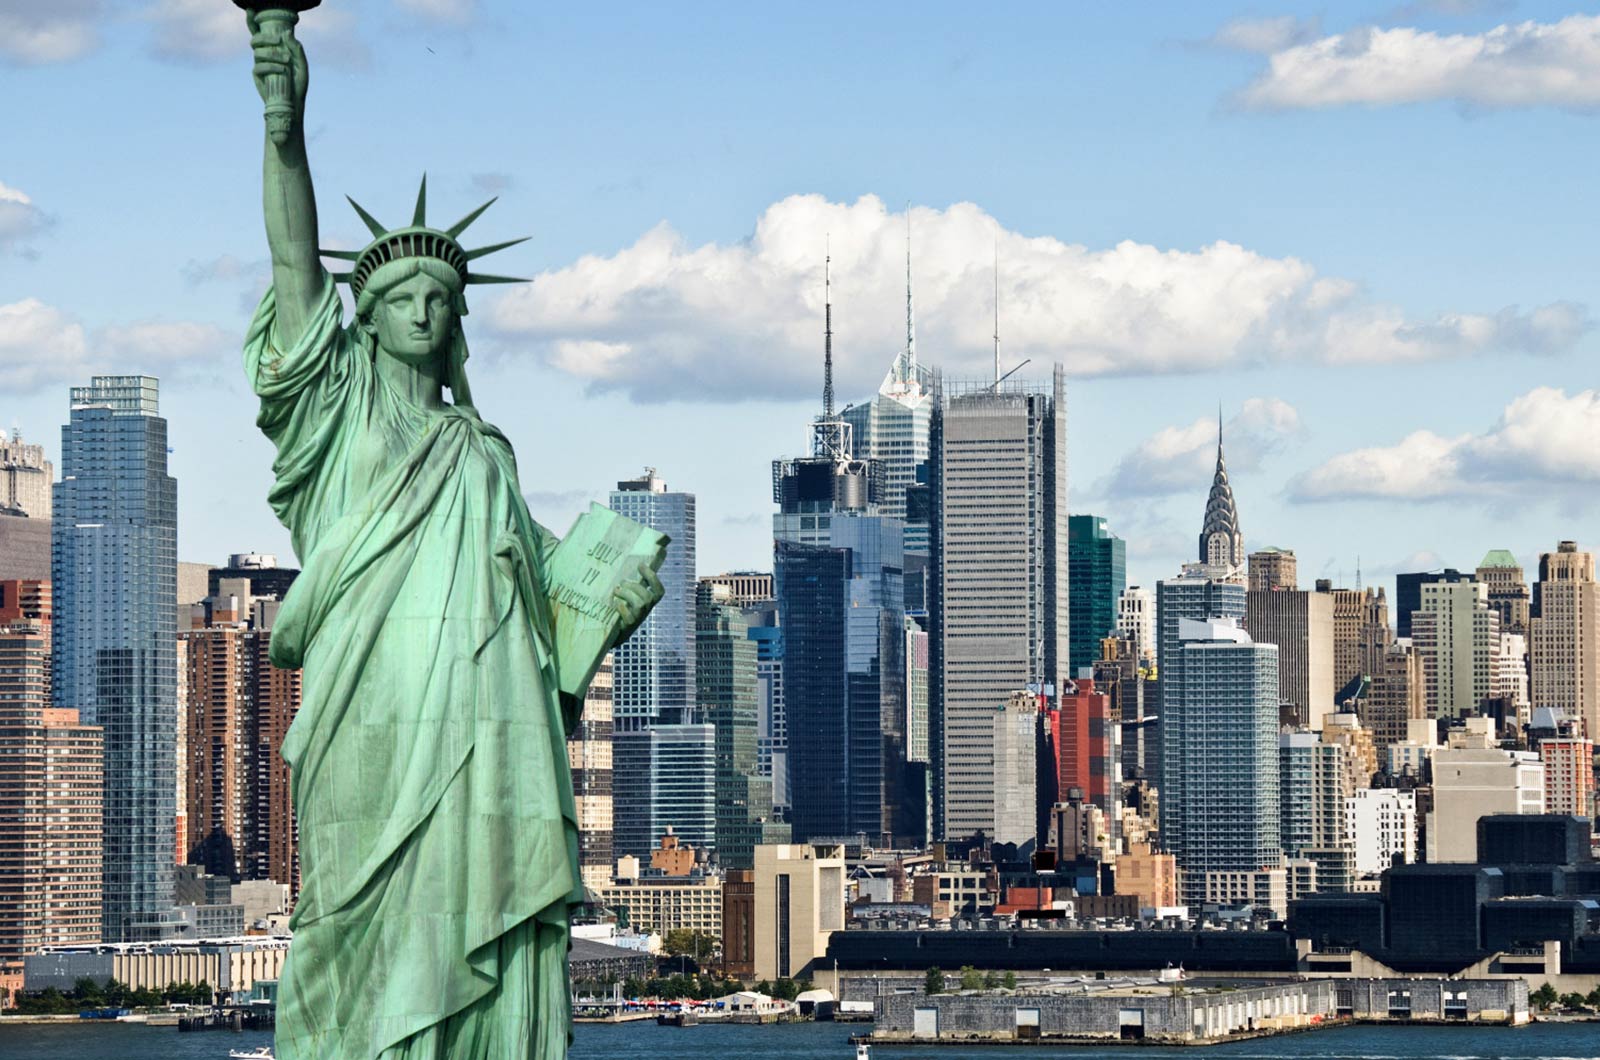 New York Featured Image | New York Virtual Tour Photographer | New York Aerial Photography Services | New York HDR Real Estate Photography Services | New York Matterport 3D Tours